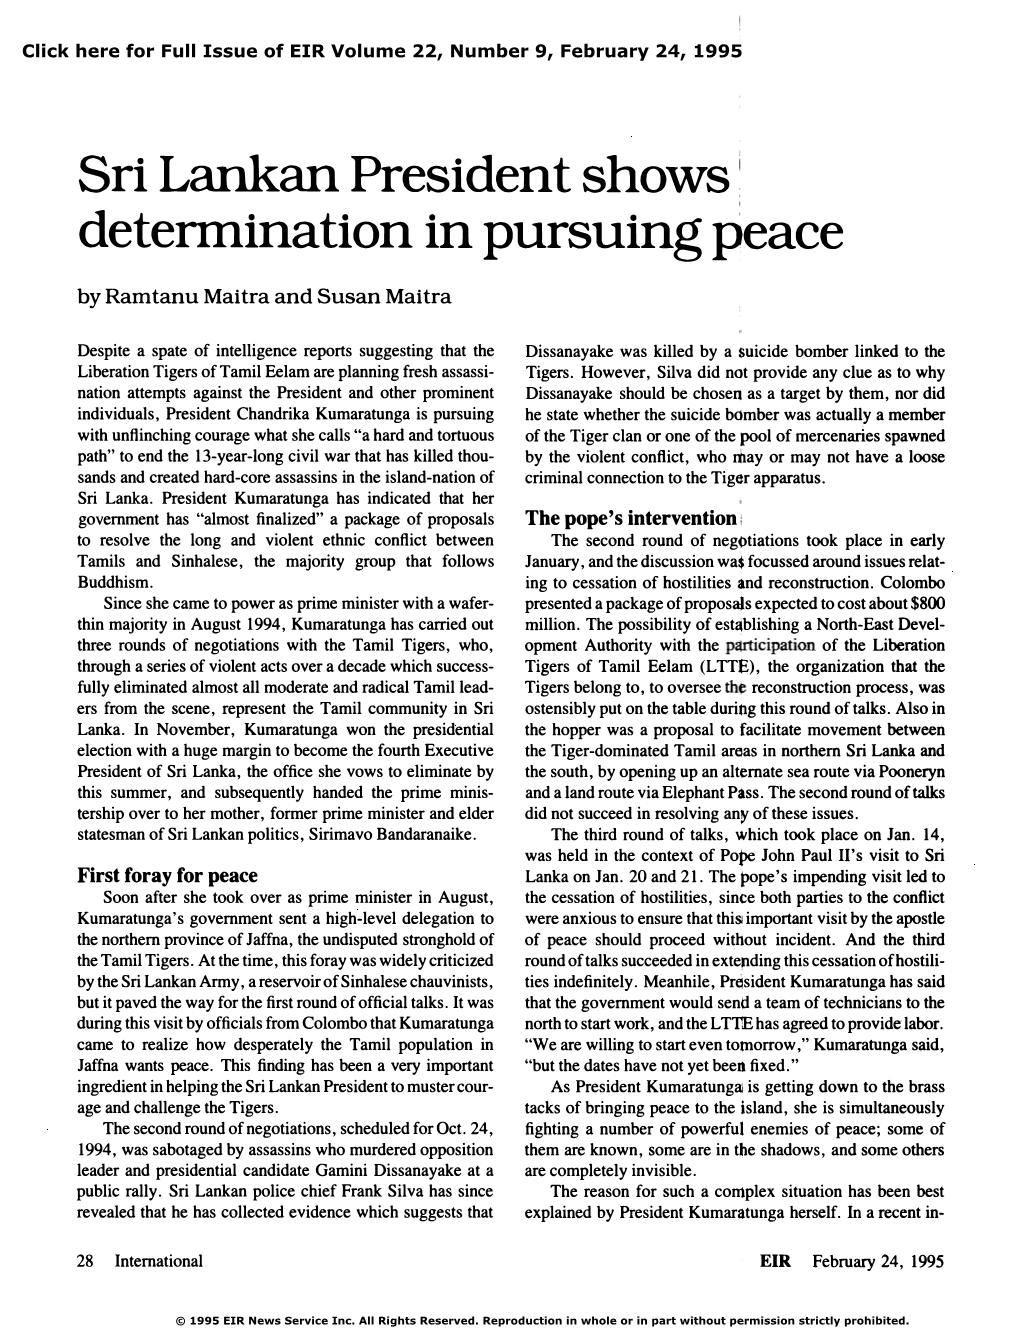 Sri Lankan President Shows Determination in Pursuing Peace